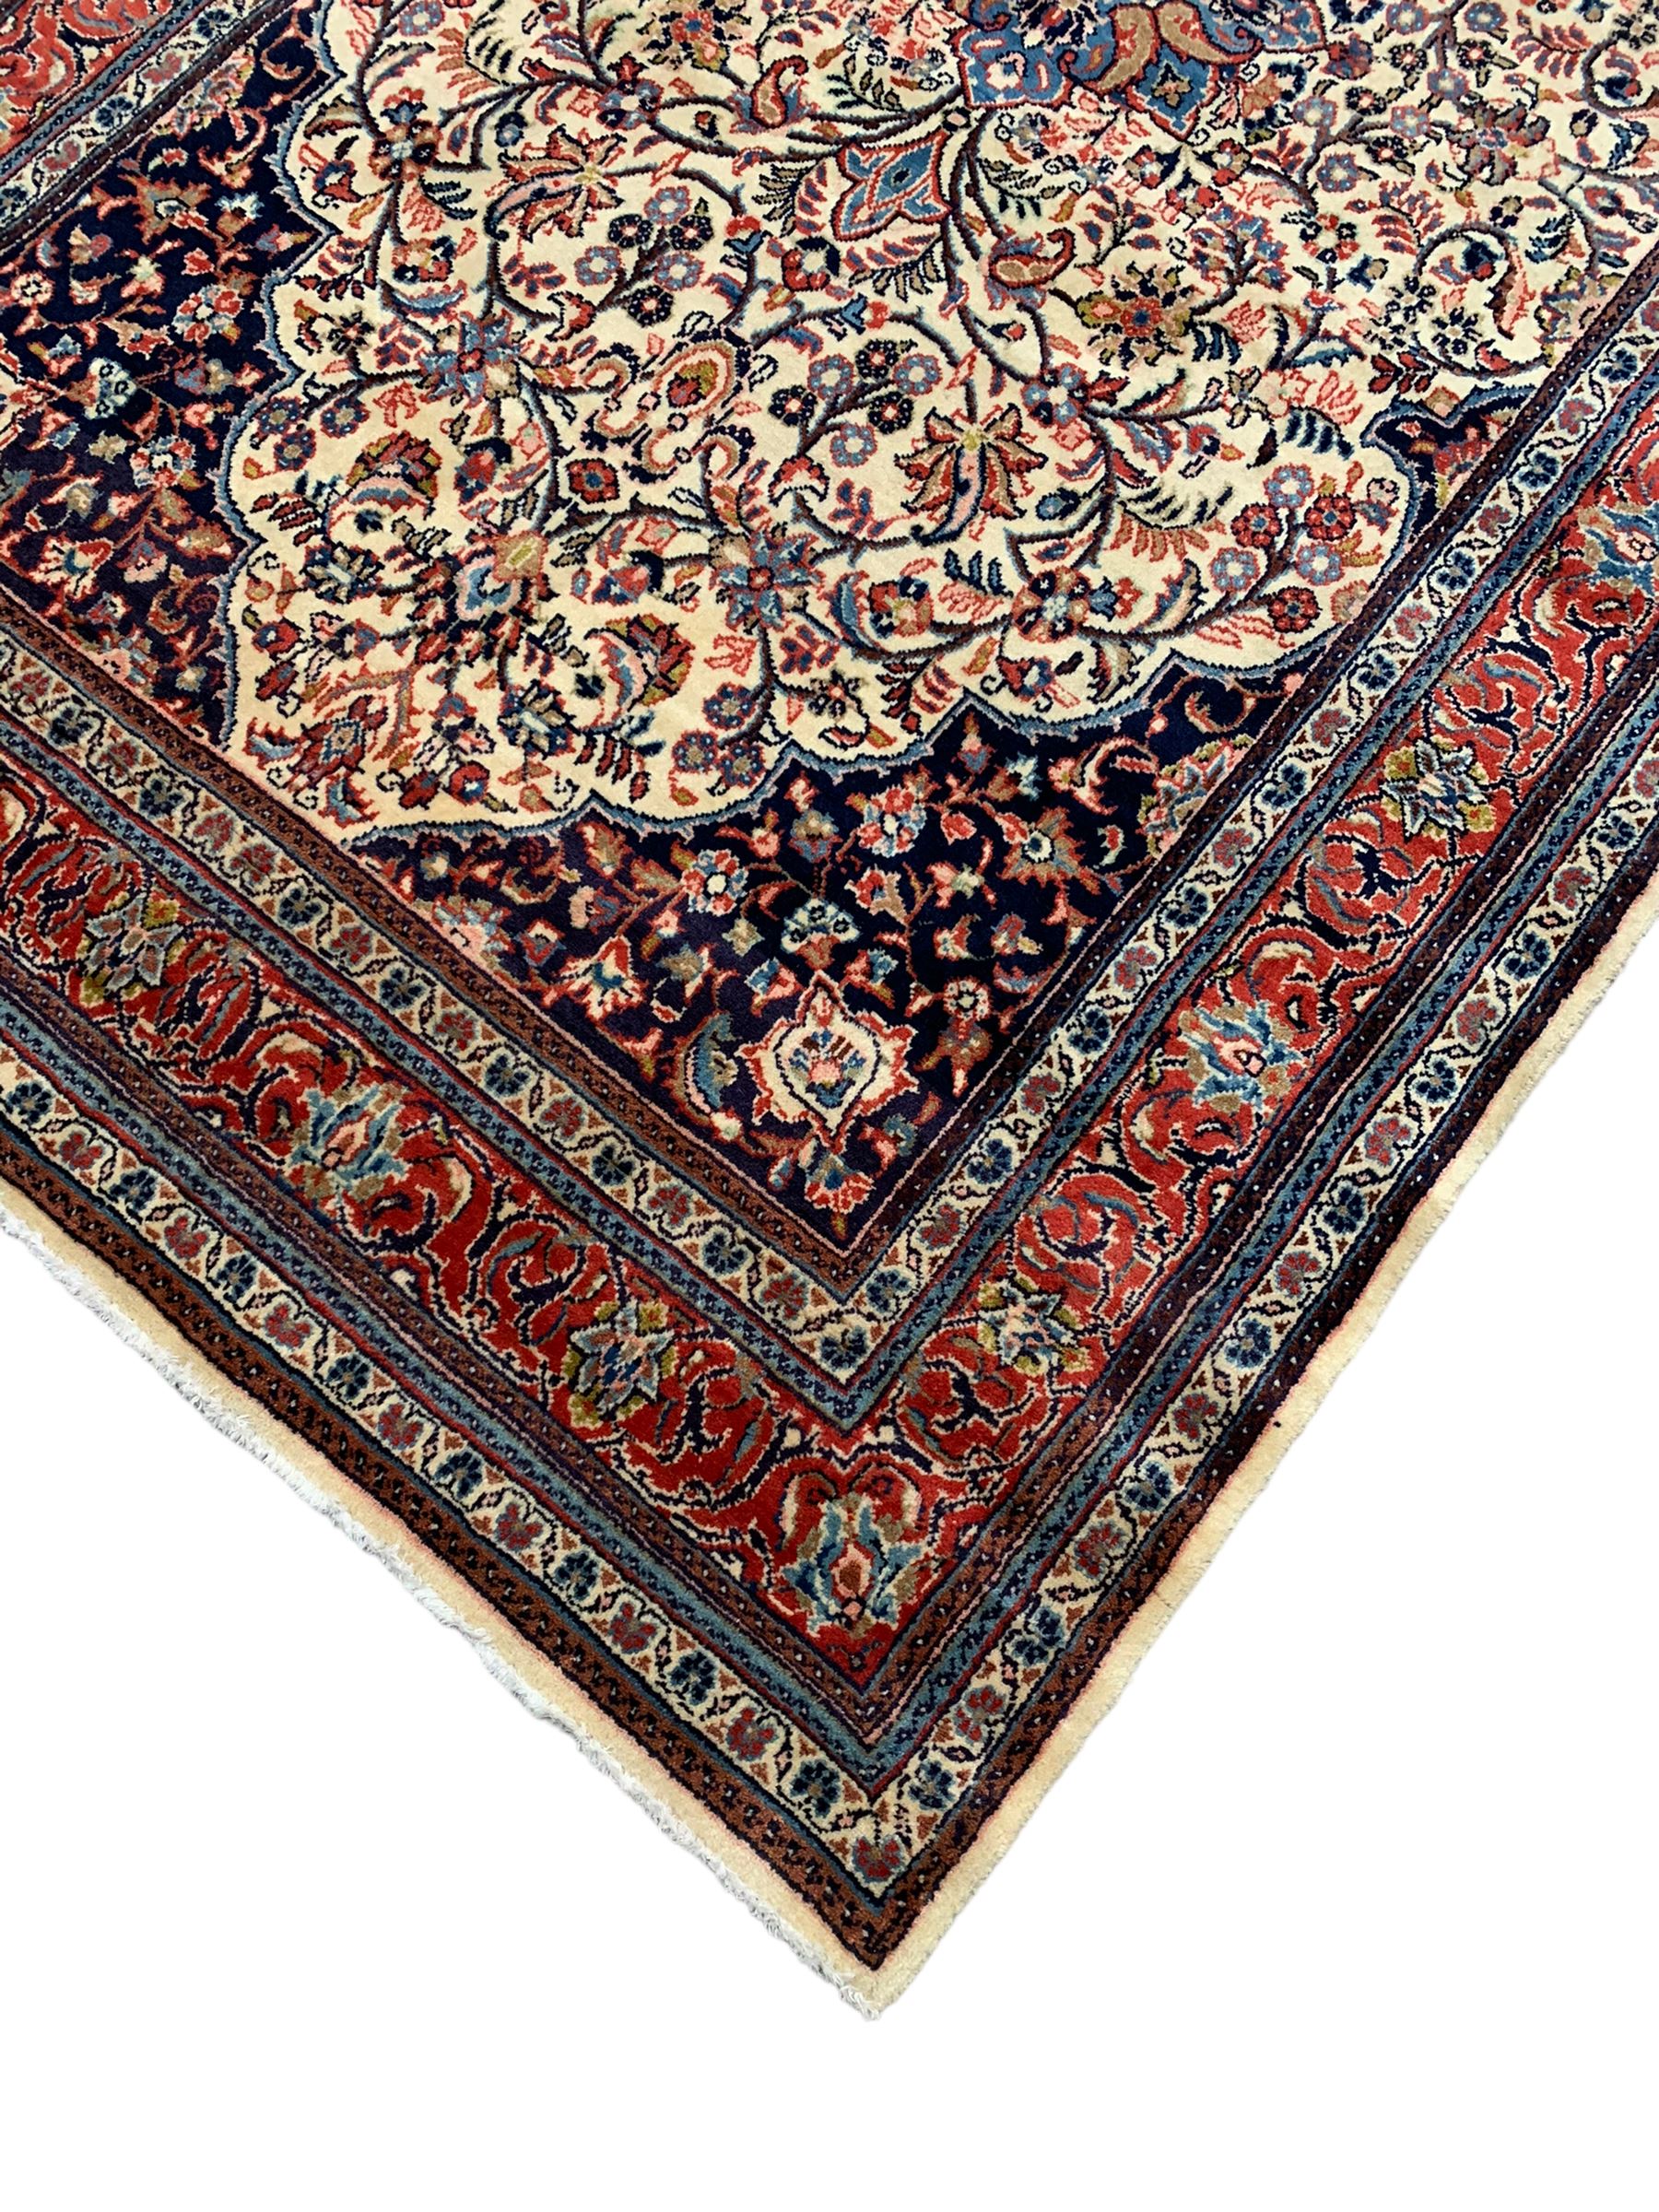 Persian Mahallat crimson ground rug - Image 5 of 8